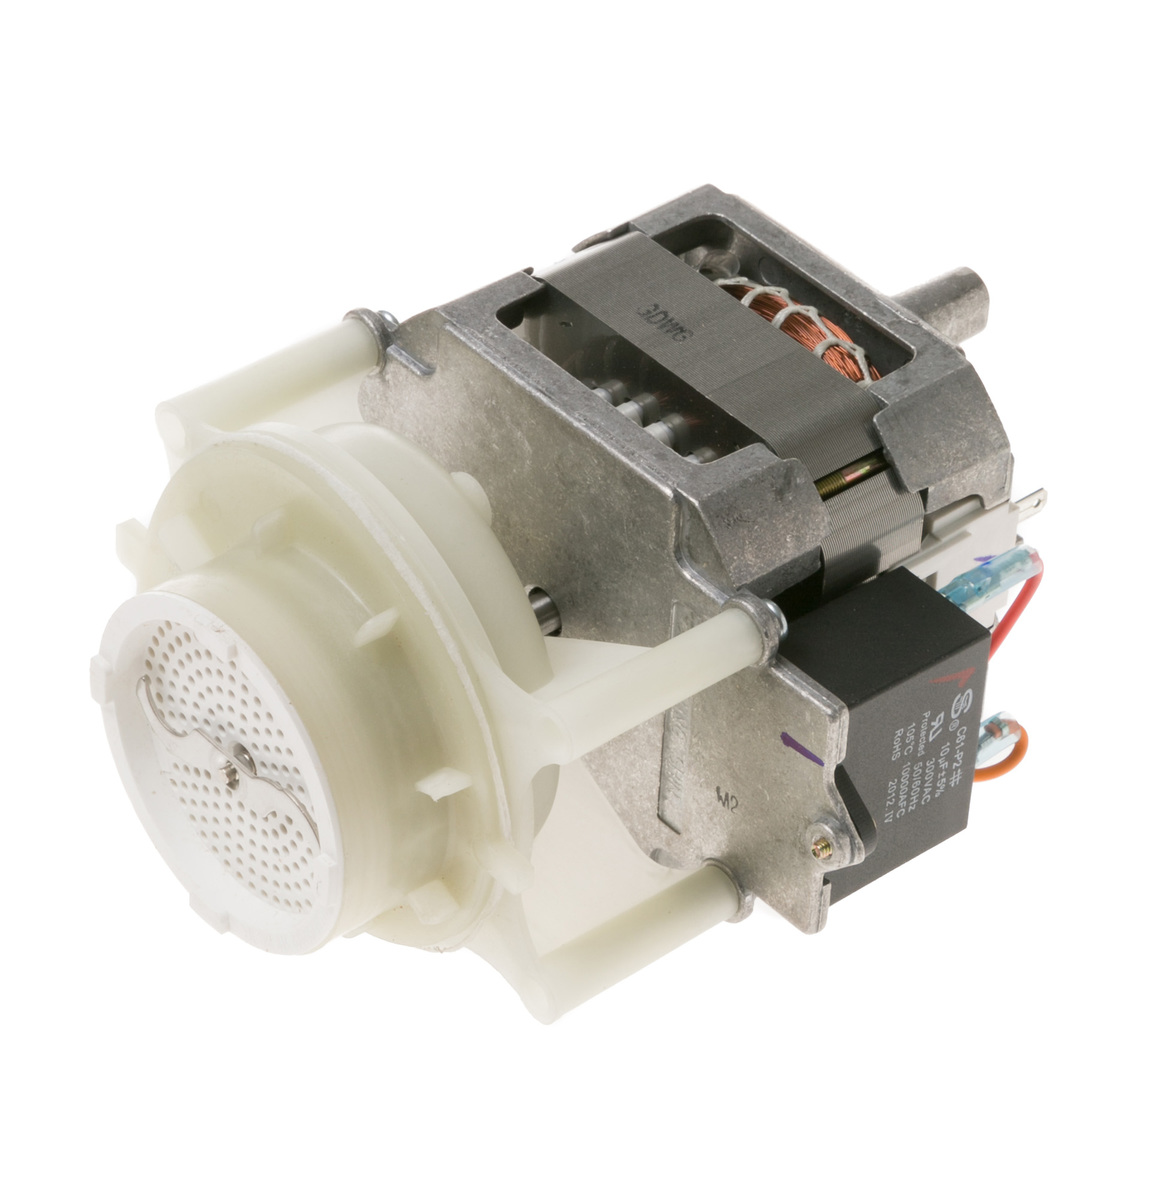 GE Dishwasher Circulation Pump & Motor Assembly. Part #WG04F04741